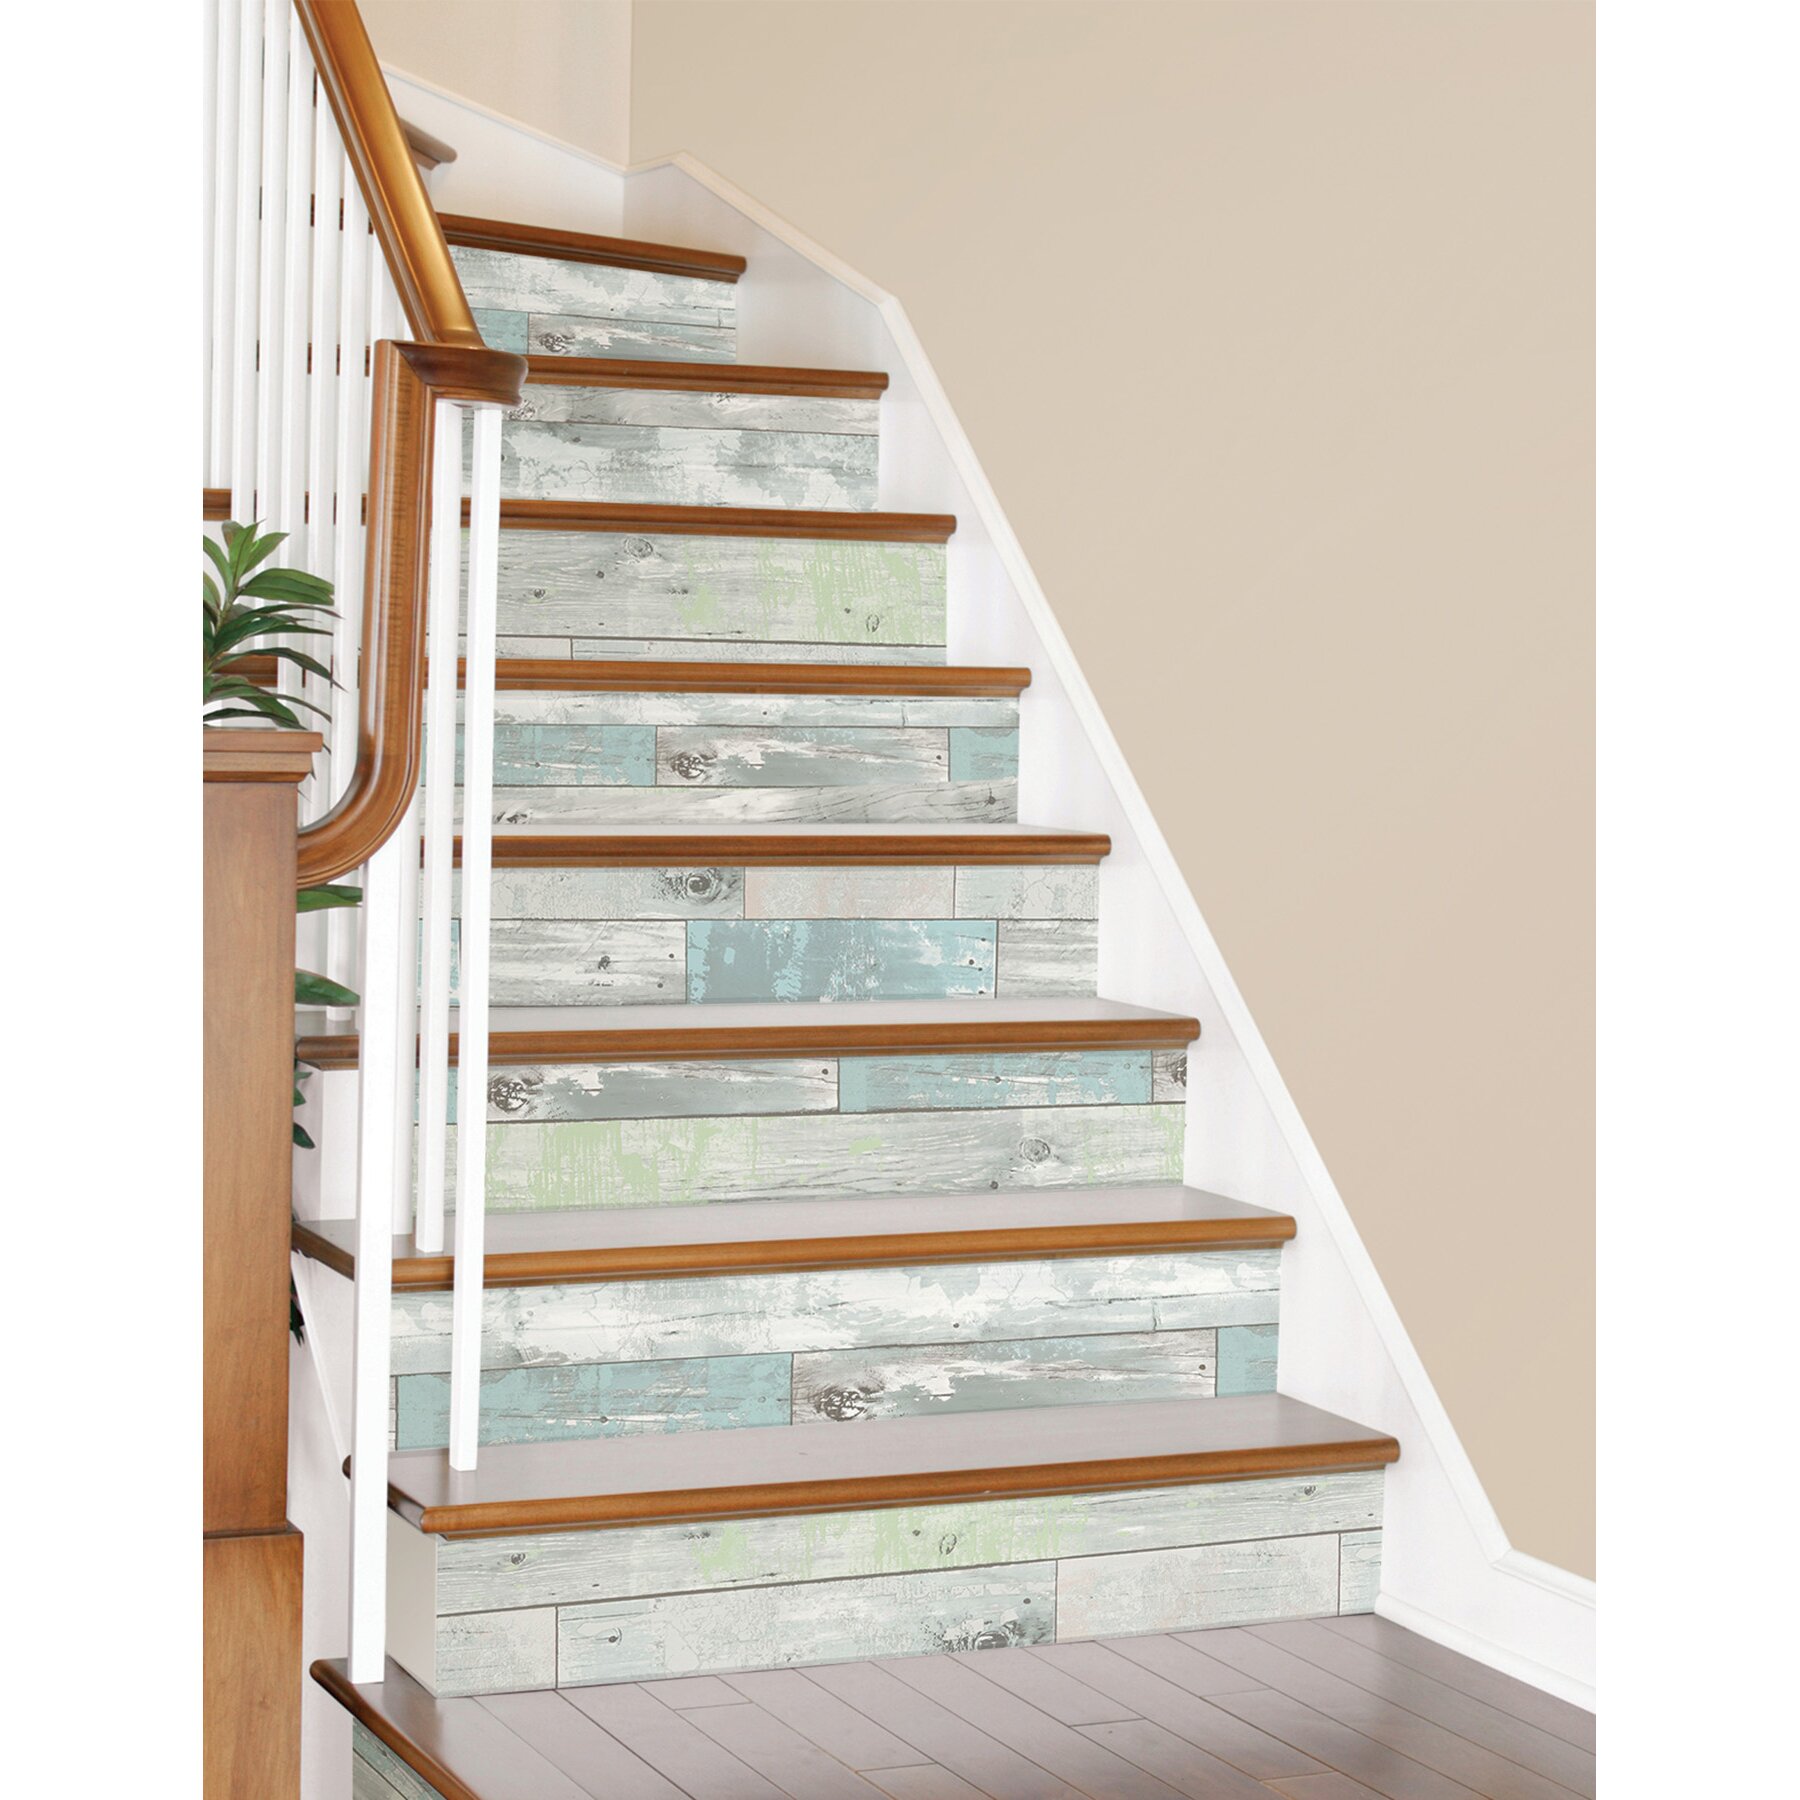 beachwood wallpaper,stairs,handrail,property,wood,furniture